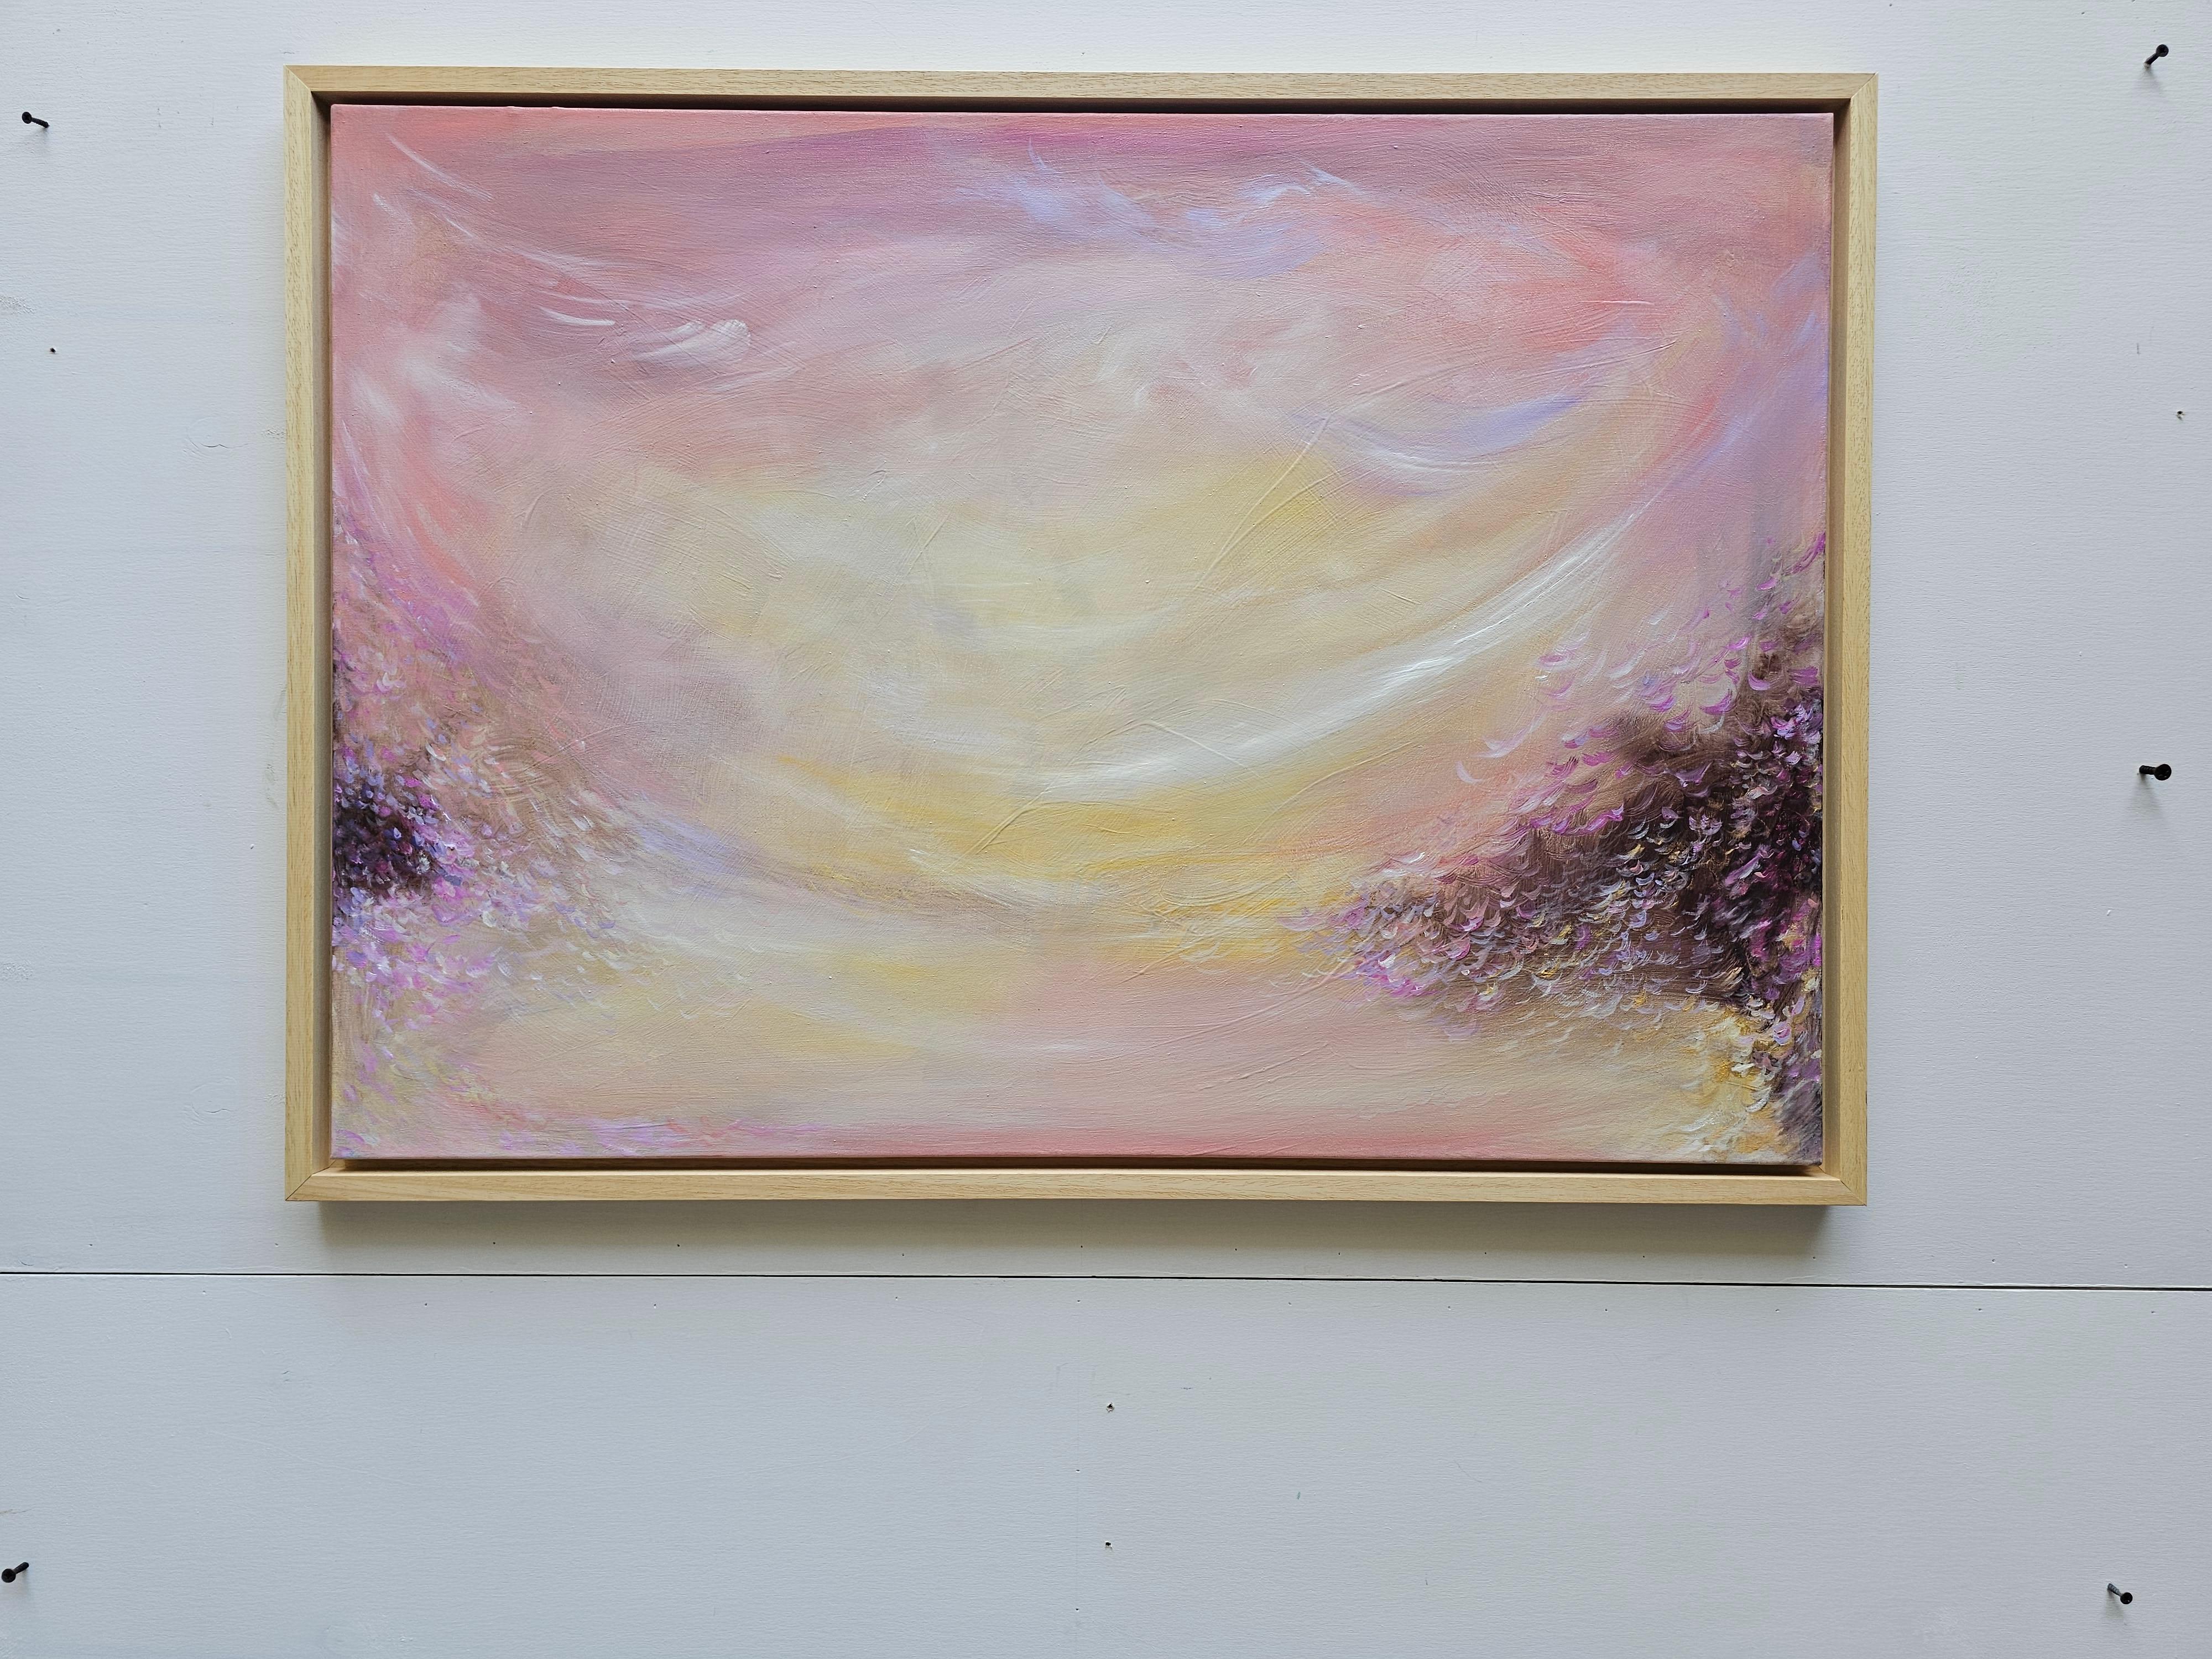 Ballad of the wind - Abstract impressionist warm sunset painting - Abstract Expressionist Painting by Jennifer L. Baker